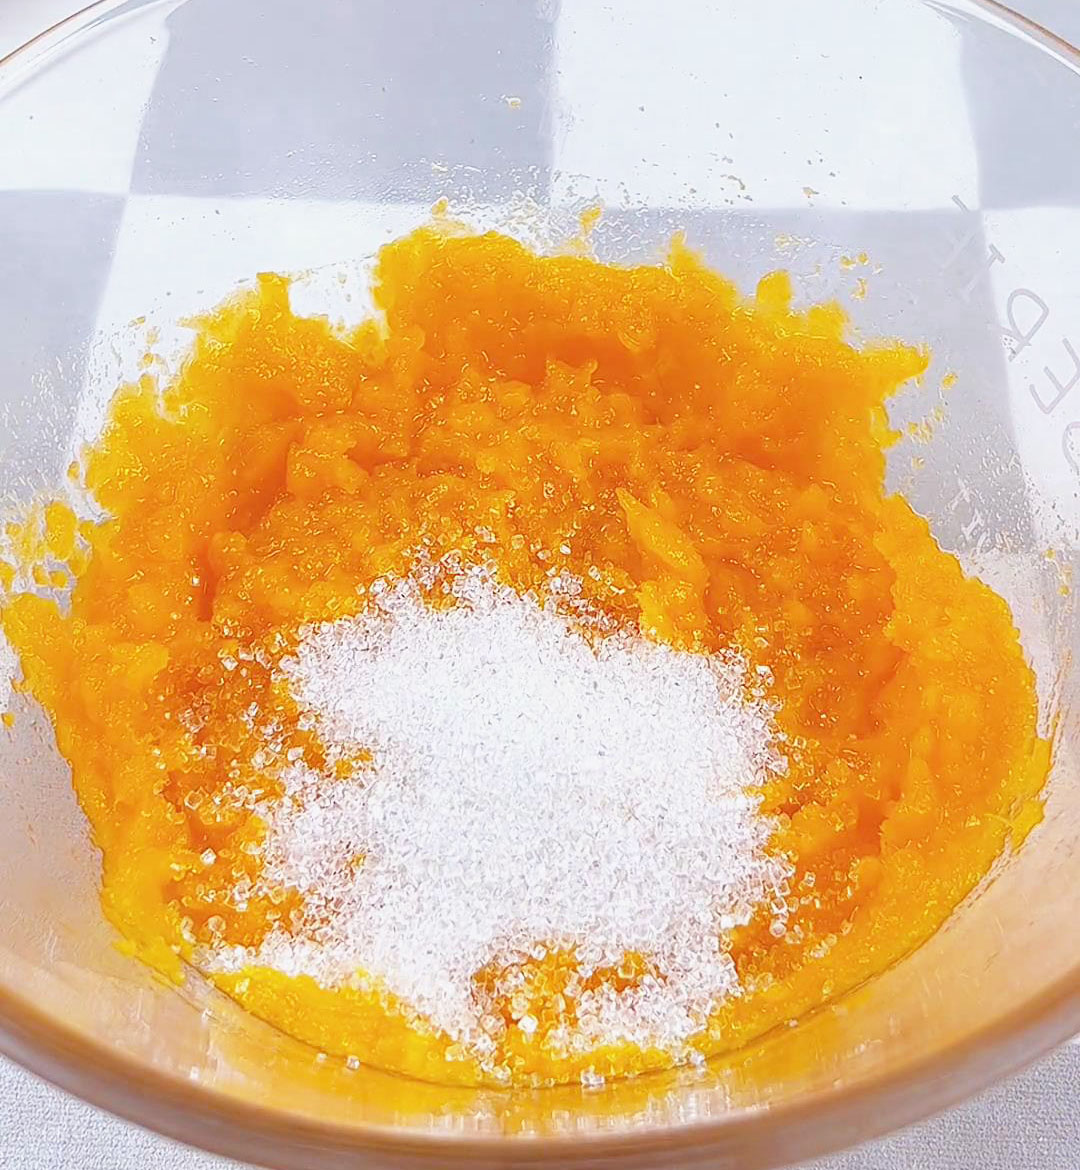 Add 20 grams of sugar to the pumpkin puree